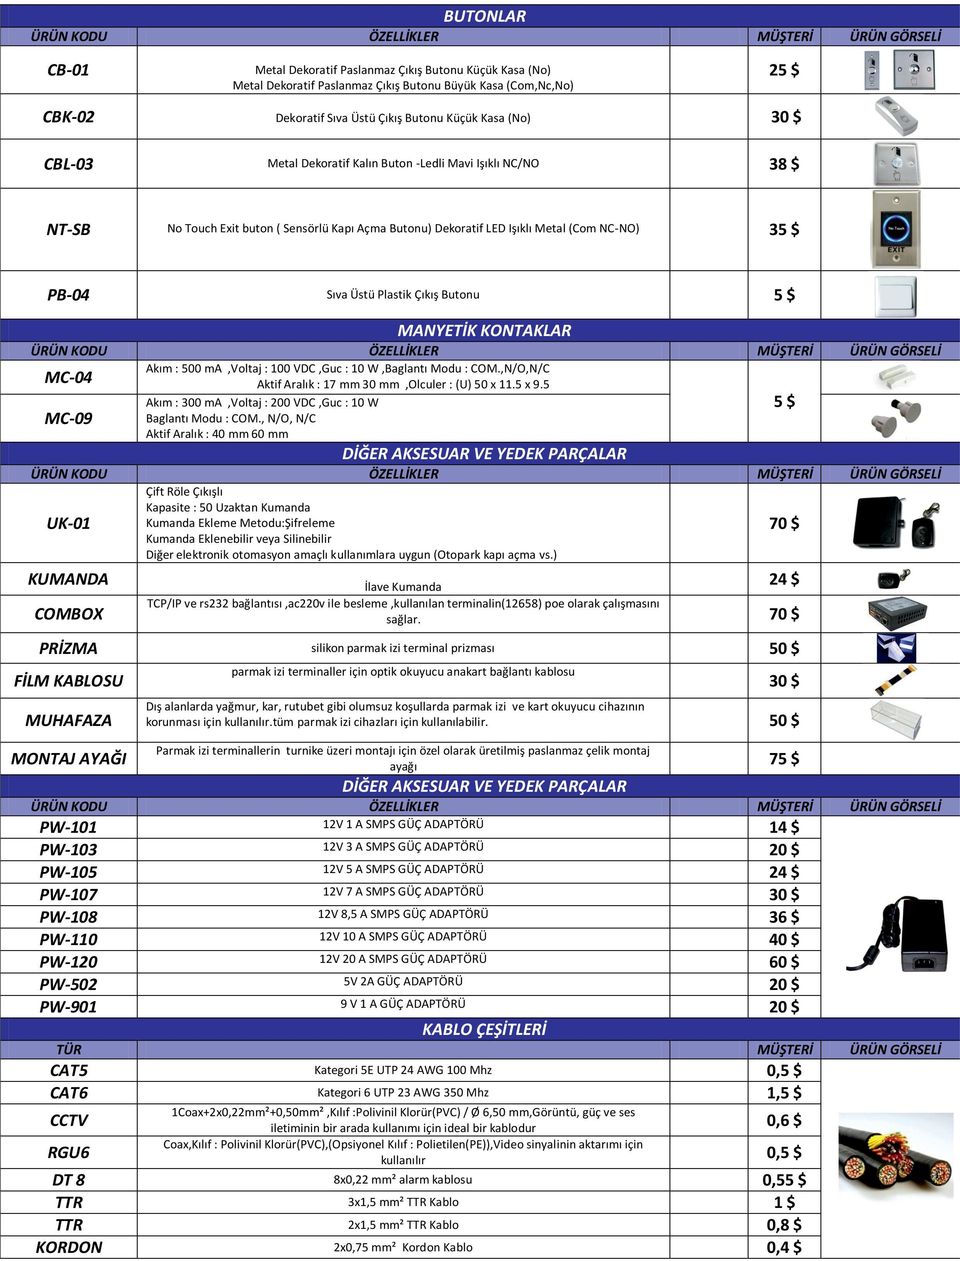 Butonu 5 $ MANYETİK KONTAKLAR MC-04 Akım : 500 ma,voltaj : 100 VDC,Guc : 10 W,Baglantı Modu : COM.,N/O,N/C Aktif Aralık : 17 mm 30 mm,olculer : (U) 50 x 11.5 x 9.